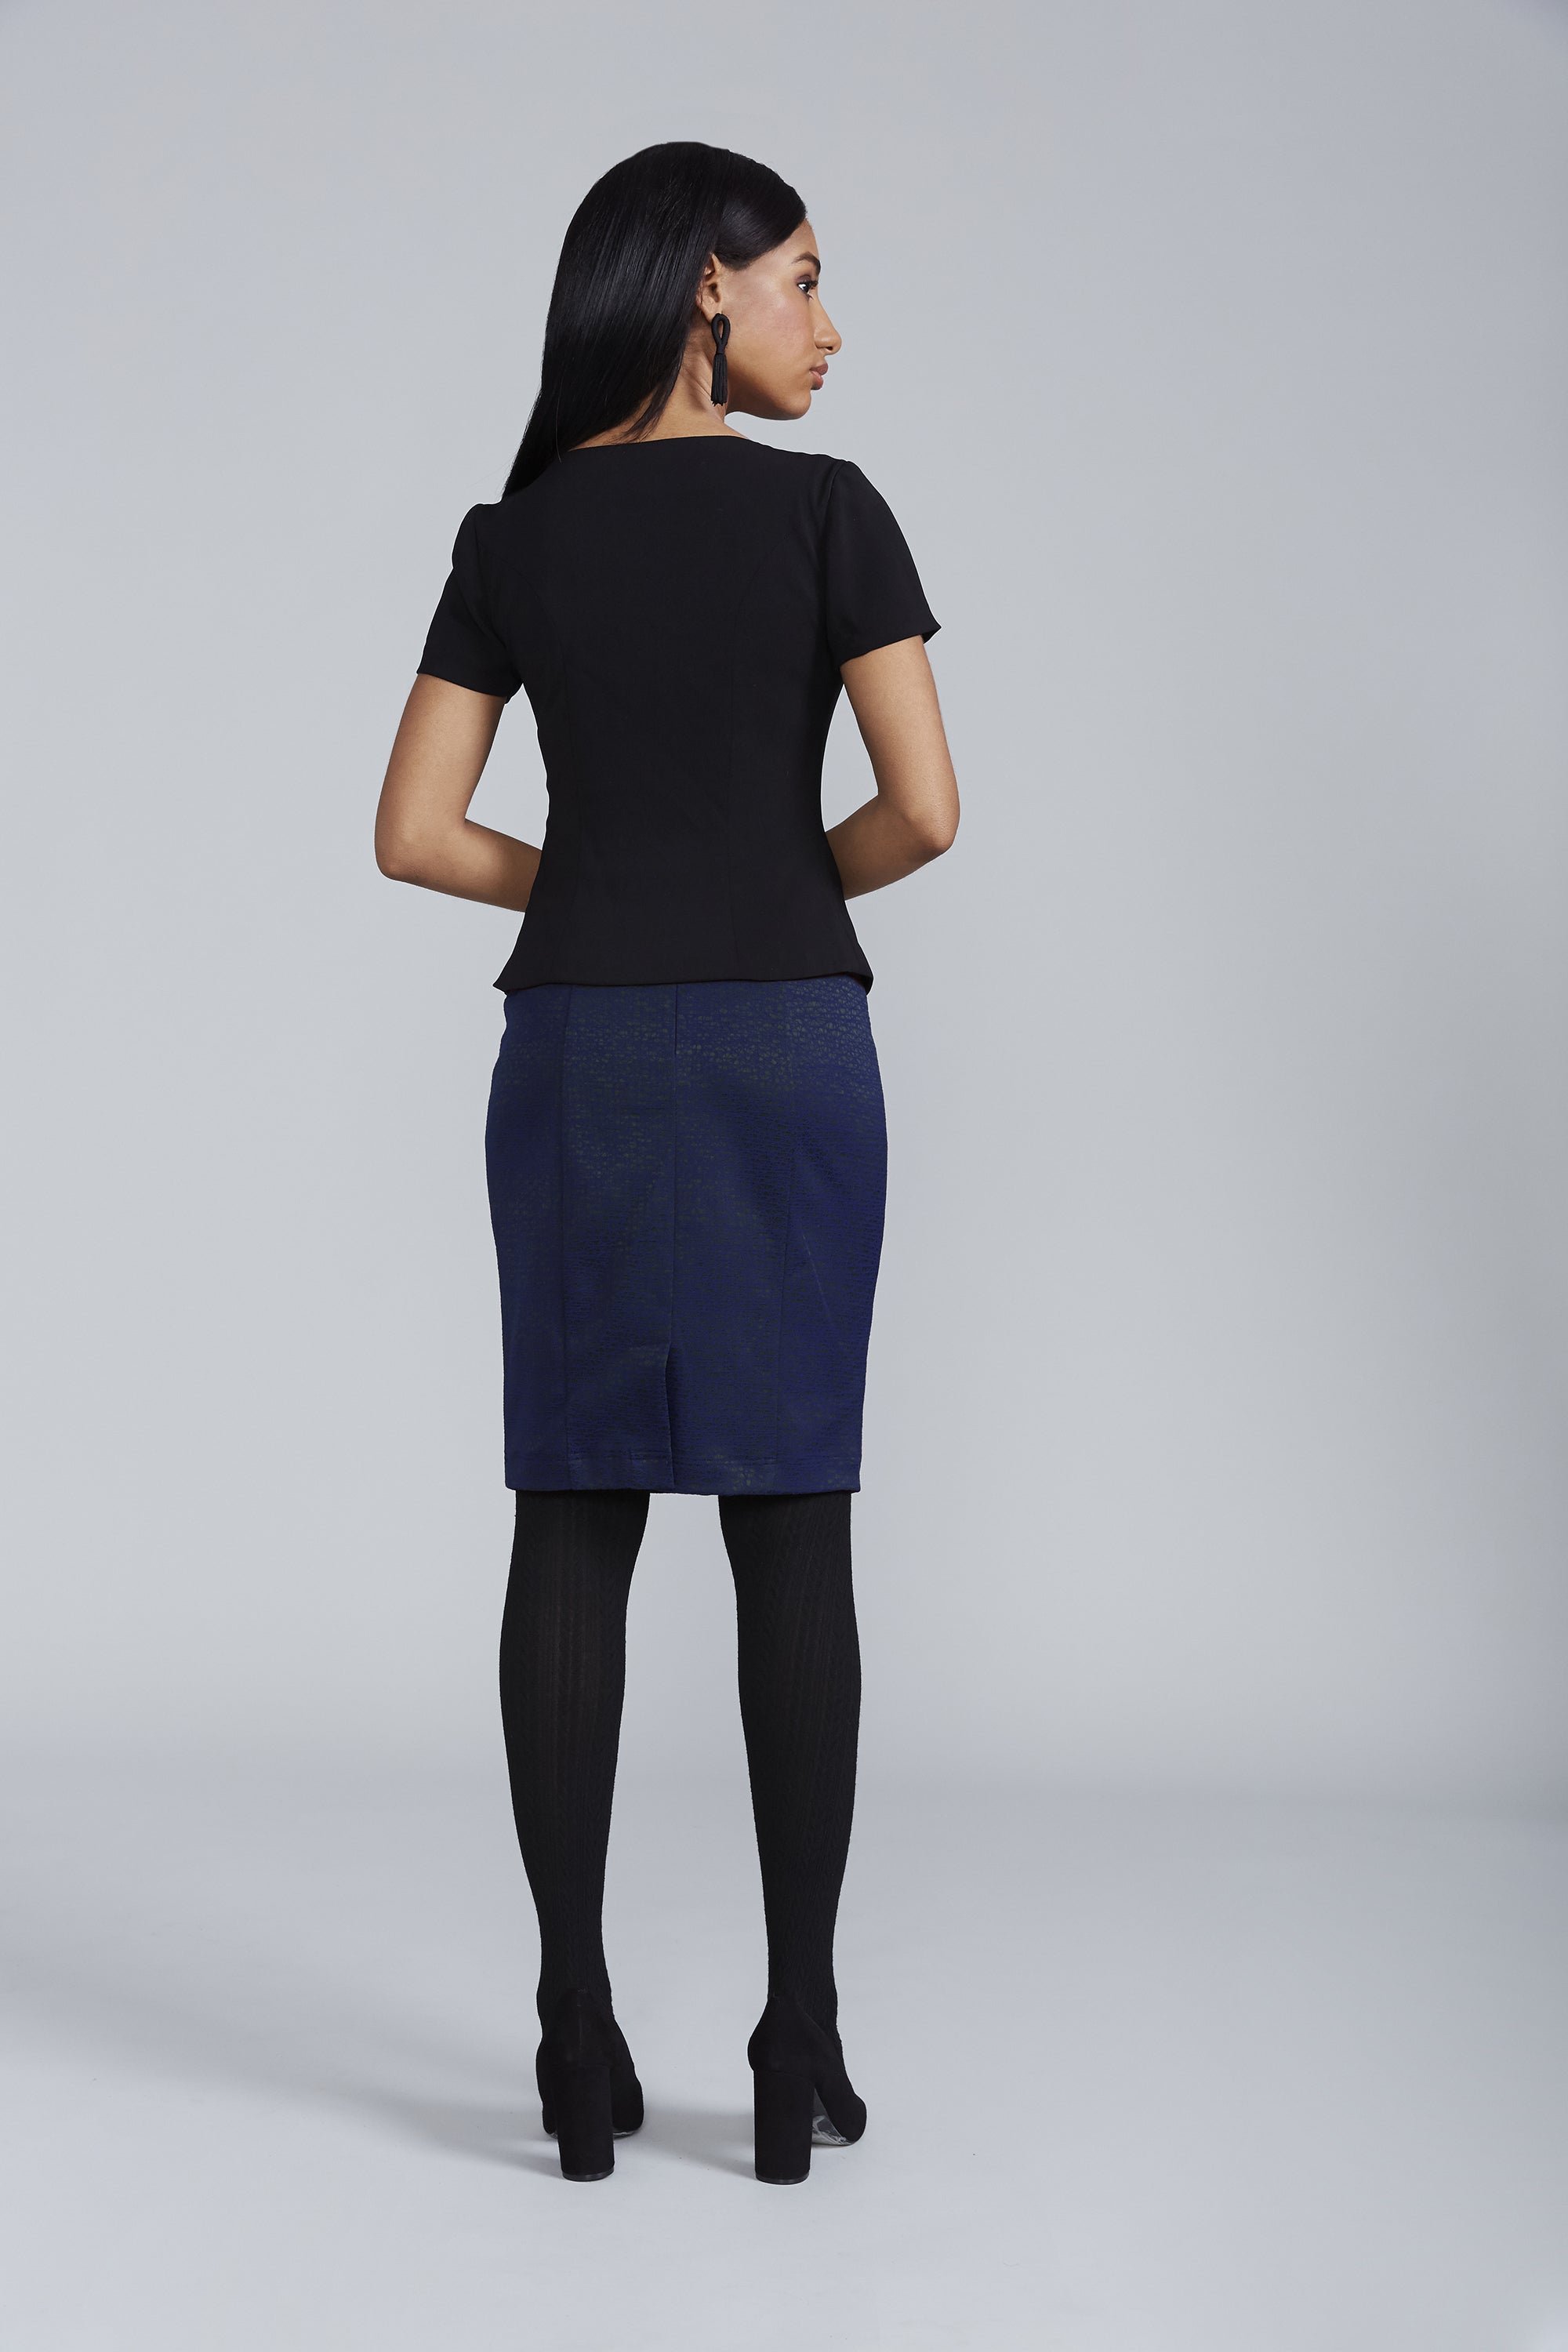 Women' Business Chelsea Skirt - Navy Jacquard NORA GARDNER | OFFICIAL STORE for work and office